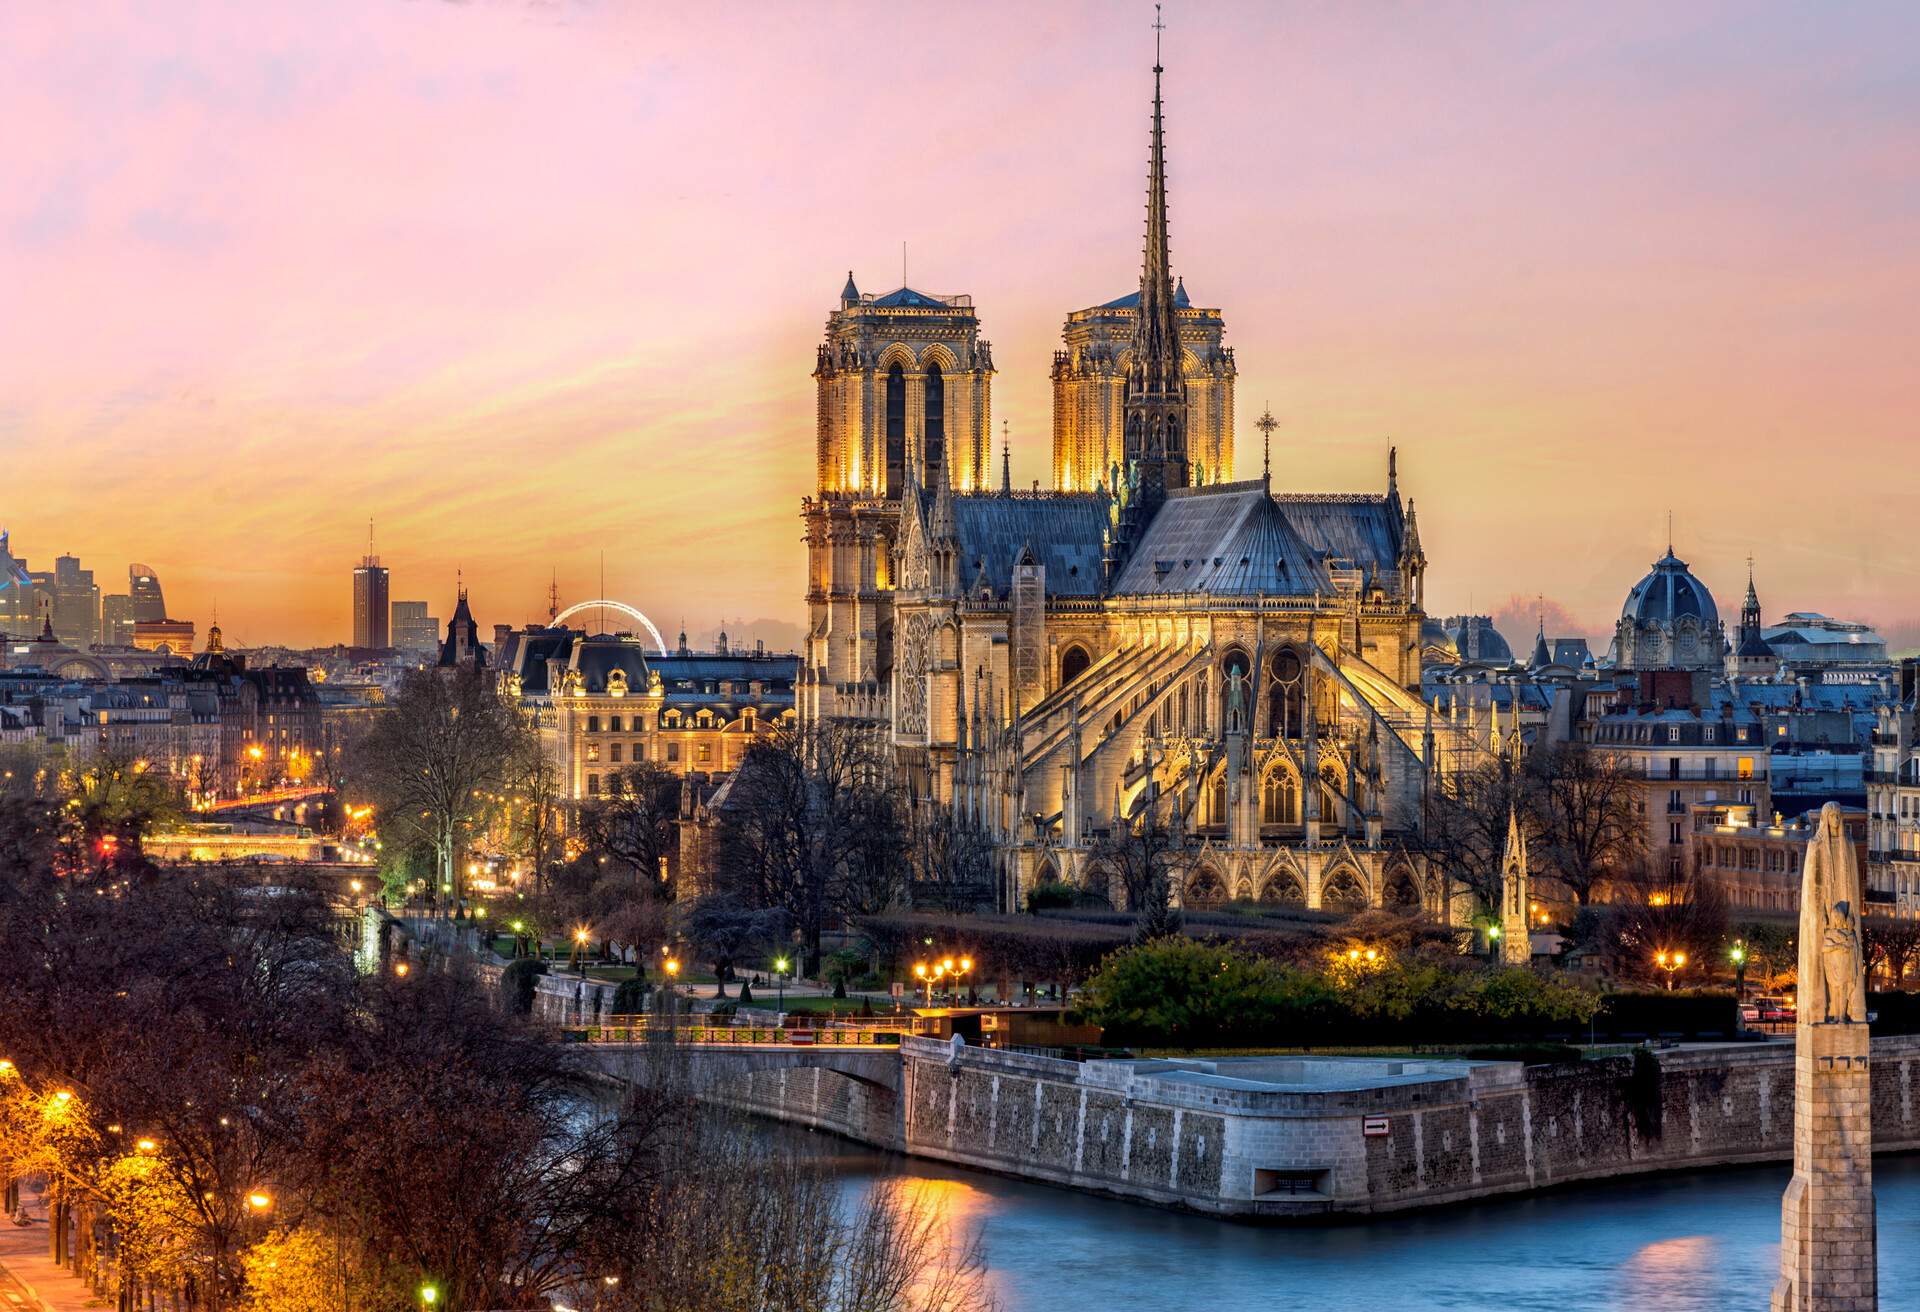 Bird view of the cathedrol Notre de Paris sunset in Paris, France